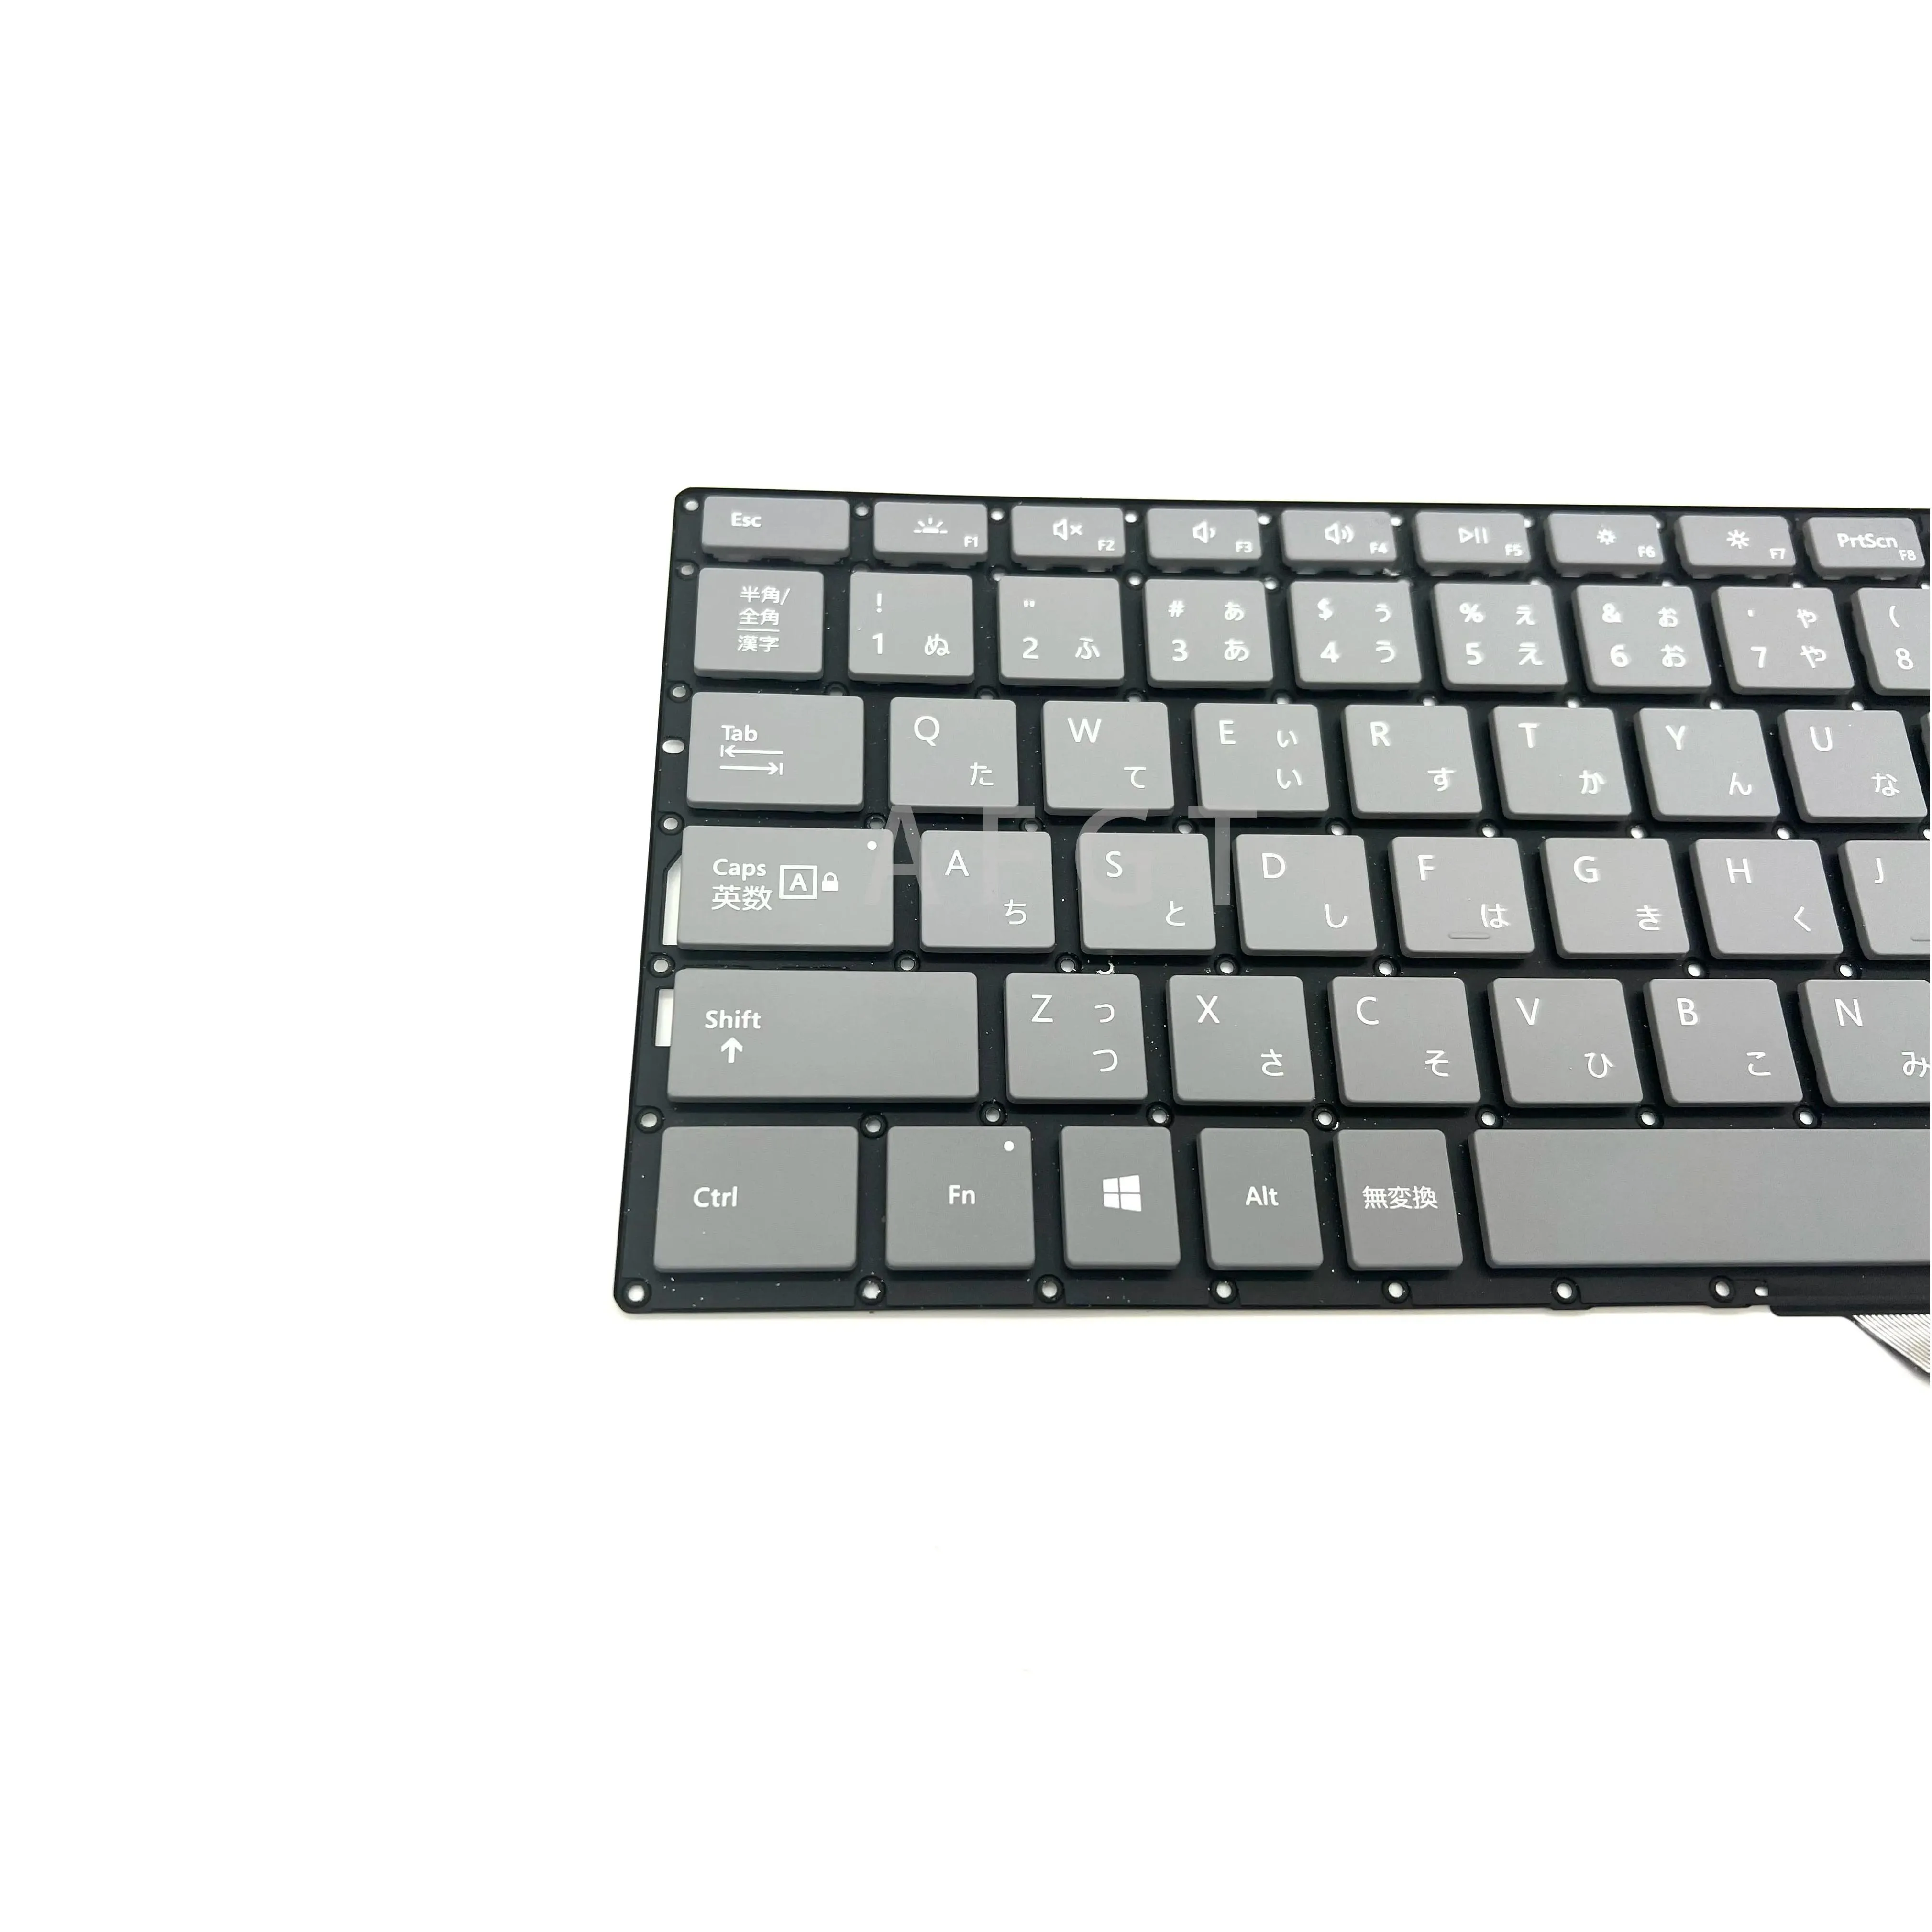 Keyboards Original Keyboard For Microsoft Surface Laptop 3 1867 1868 1873 Laptop4 1951 1958 Notebook Keyboard 13.5Inch 15Inch Japanese